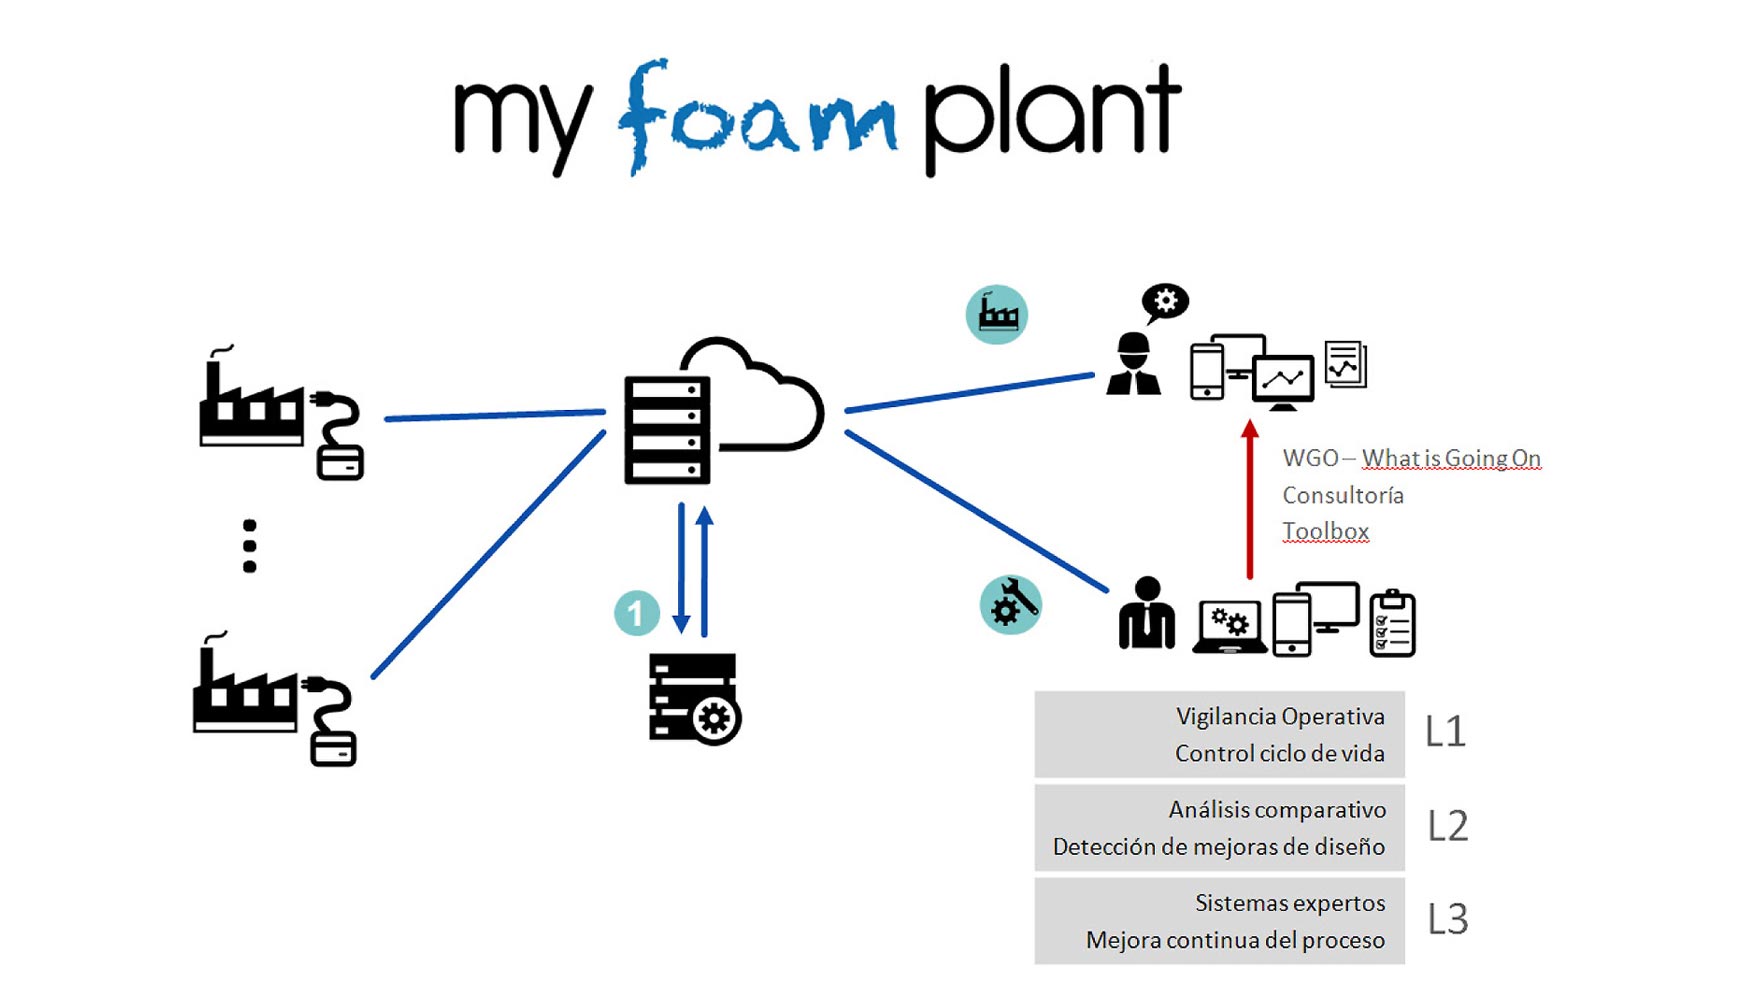 Figura 2 - Diagrama general de la plataforma MyFoamPlant